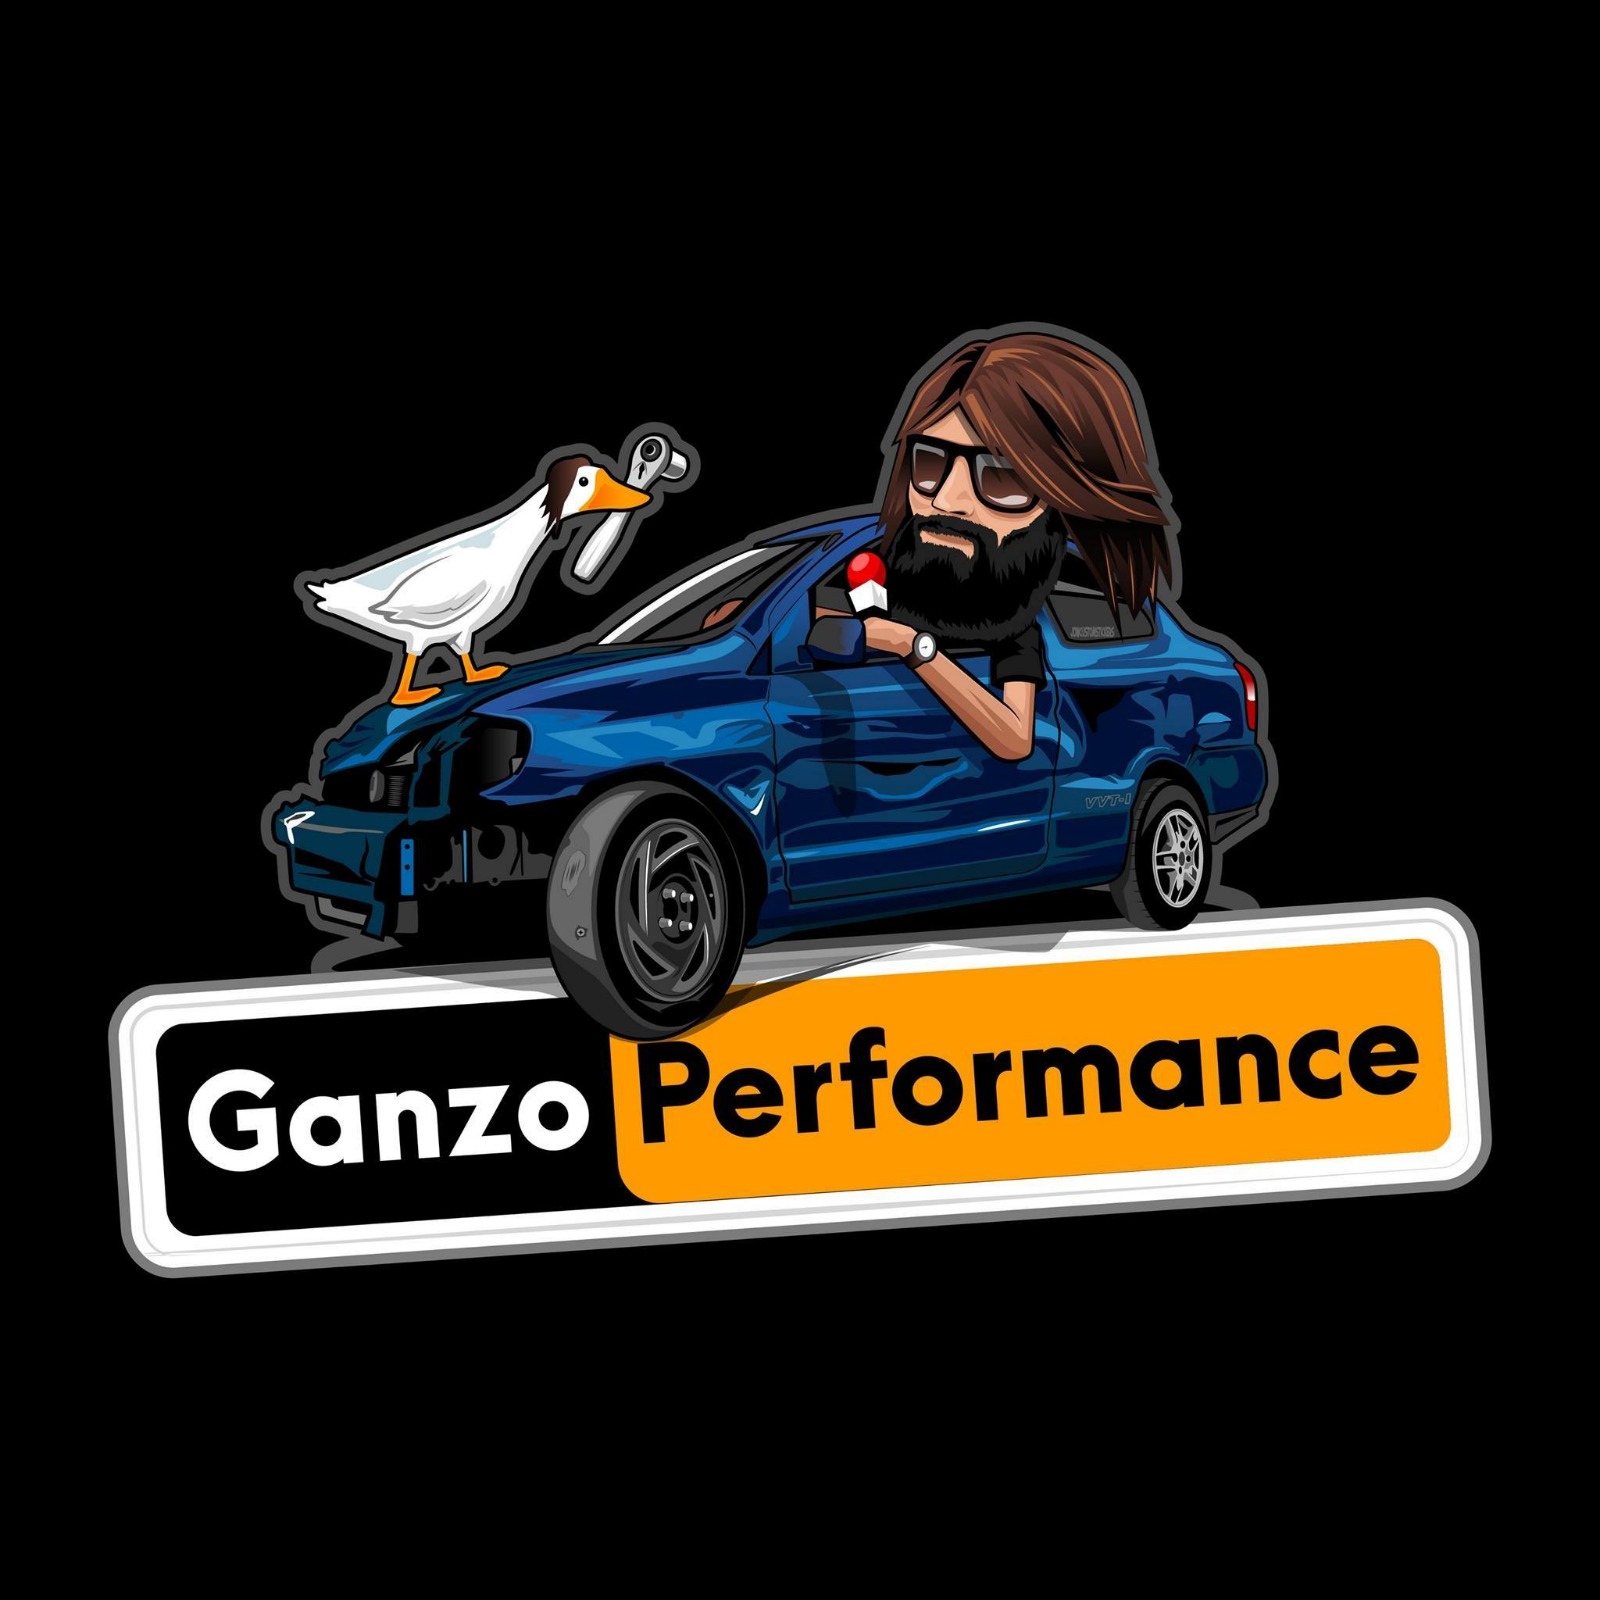 El Ganzo Performance